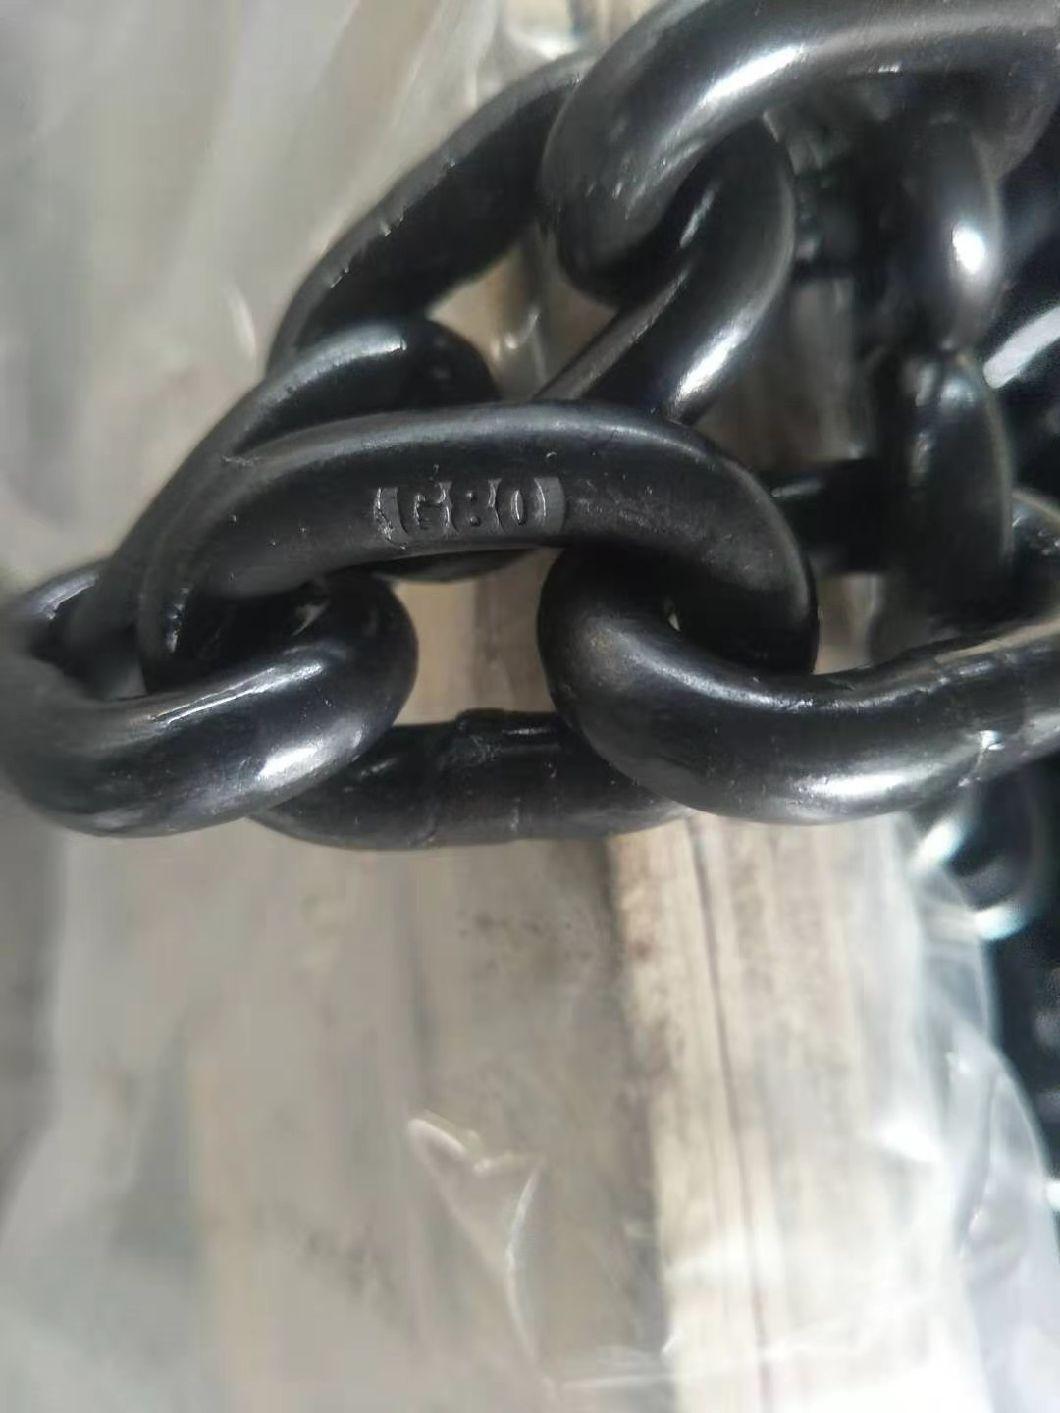 Maximum 32mm G80 Lifting Chain Polishing and Black Blackened Lifting Chains